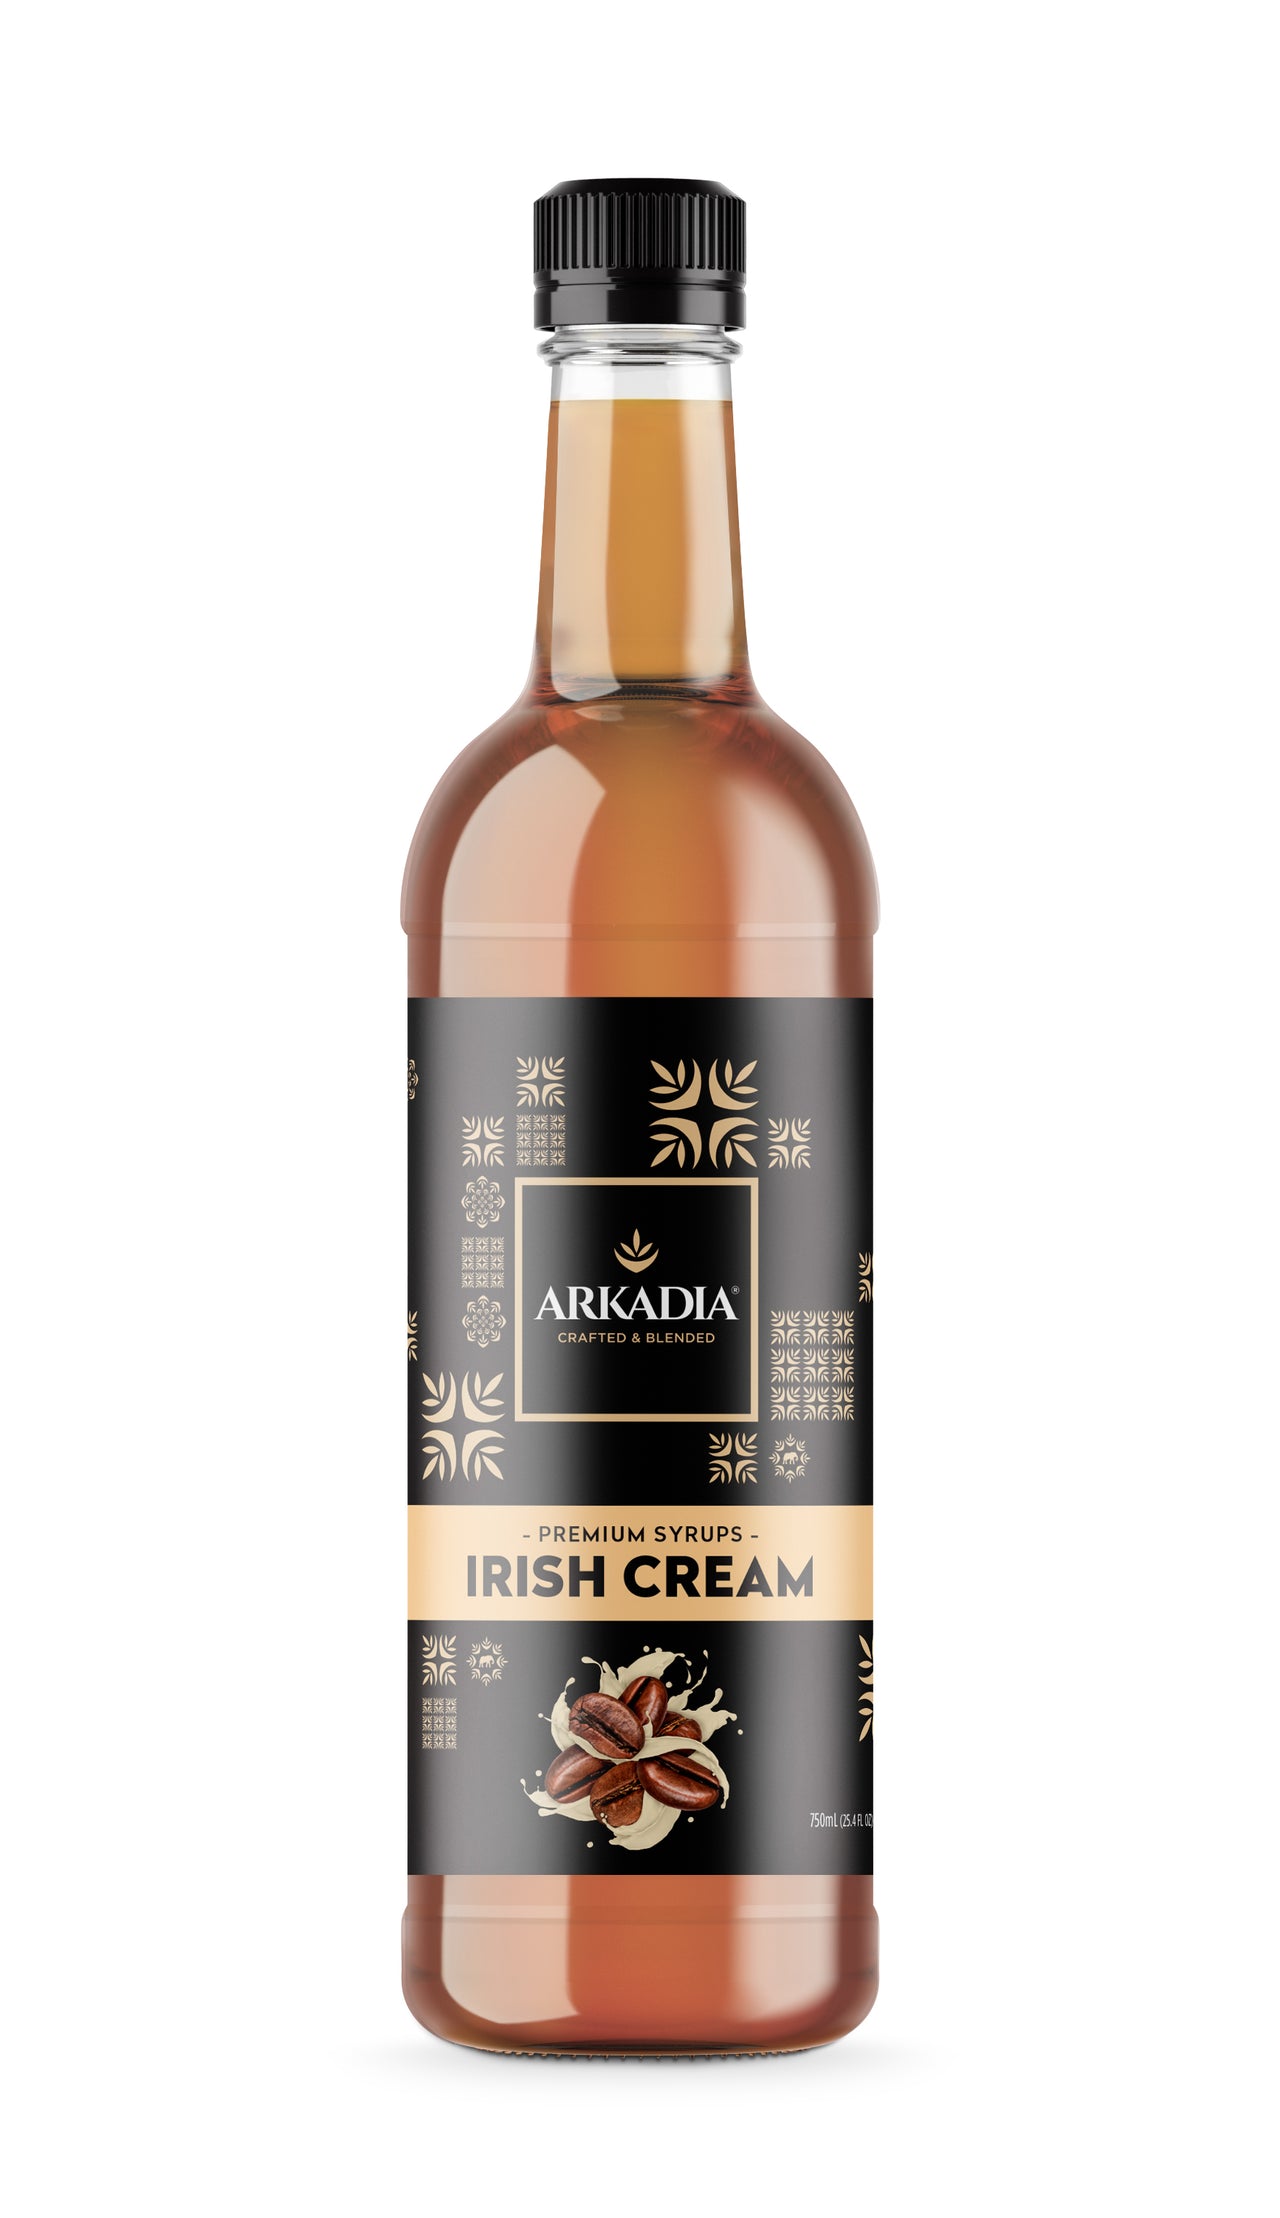 Irishcream syrup - 750ml